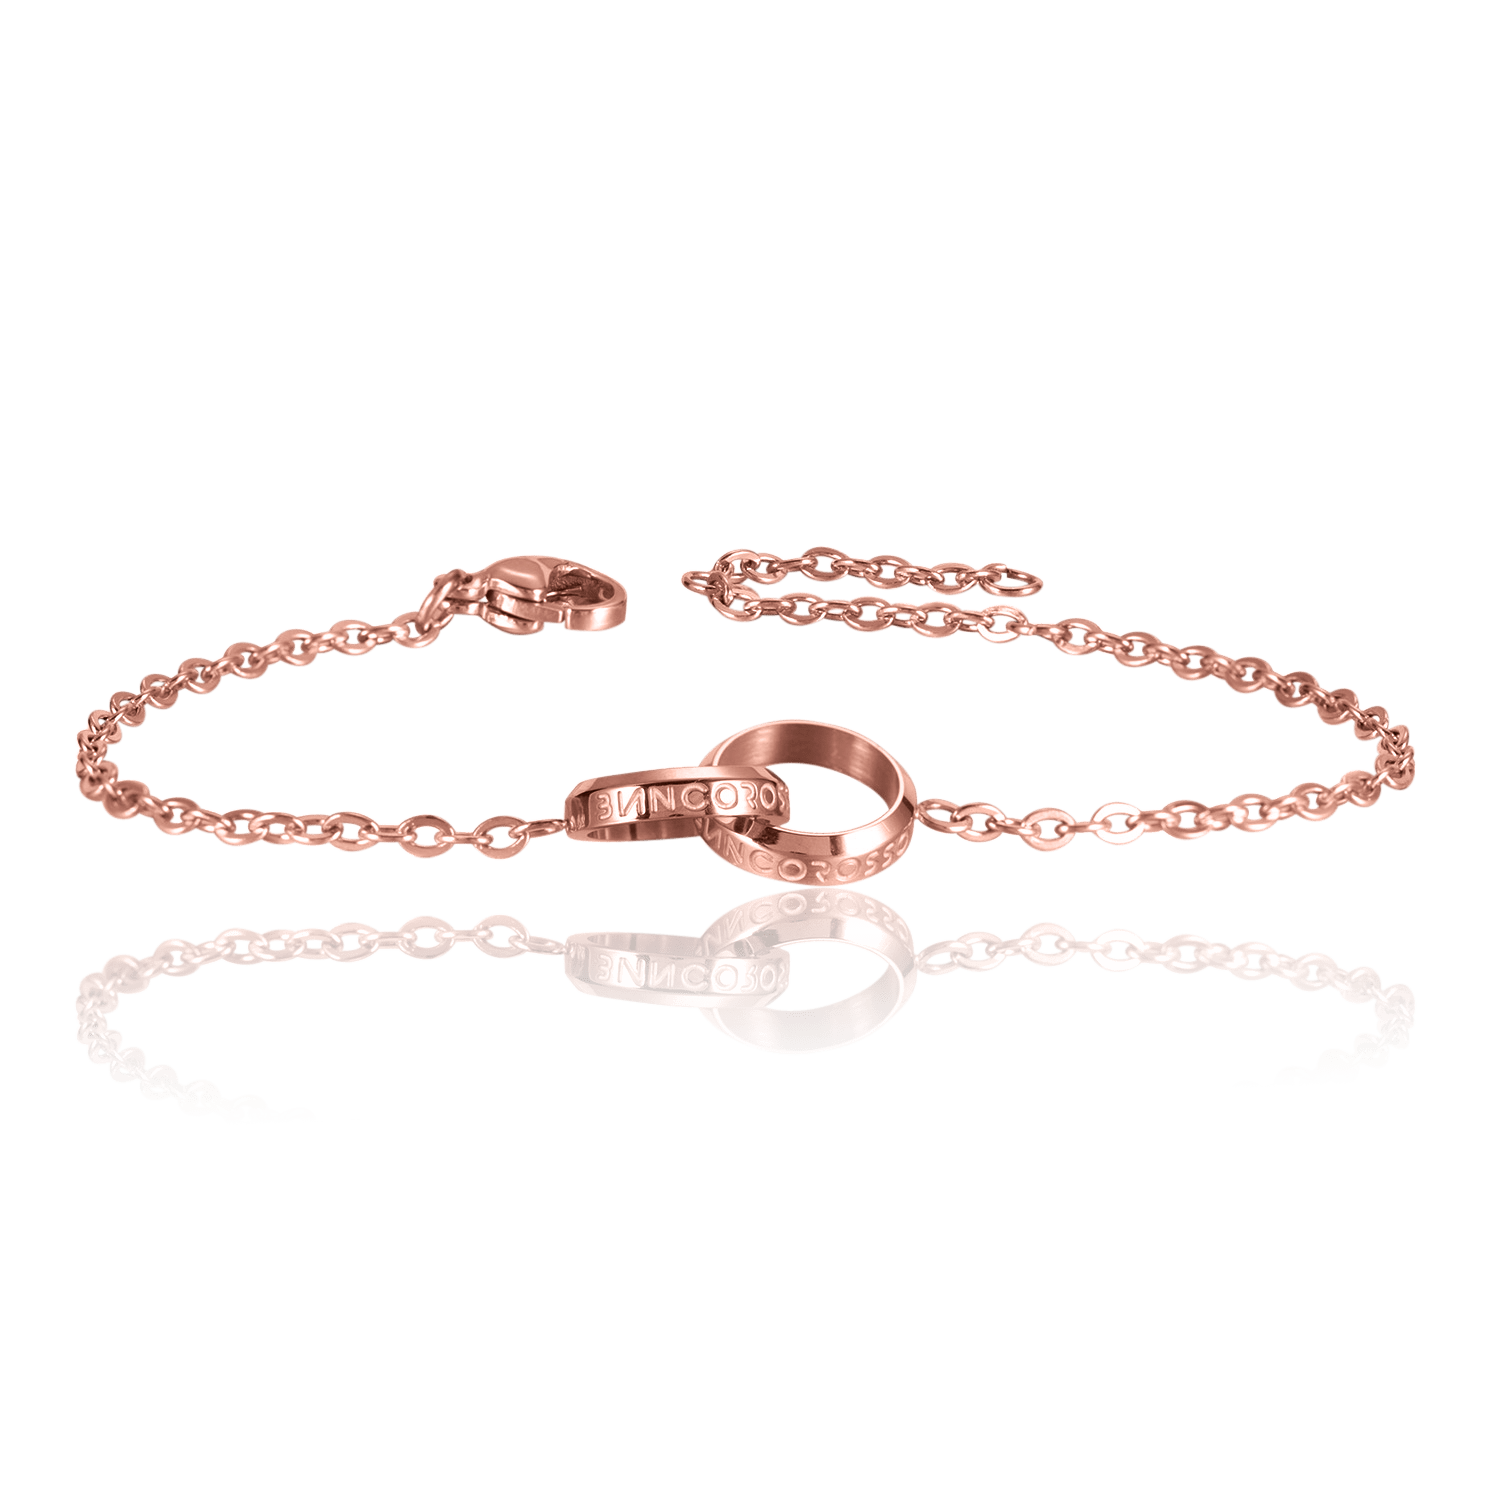 bianco rosso Bracelets To My Goddaughter - Eternity Bracelet cyprus greece jewelry gift free shipping europe worldwide